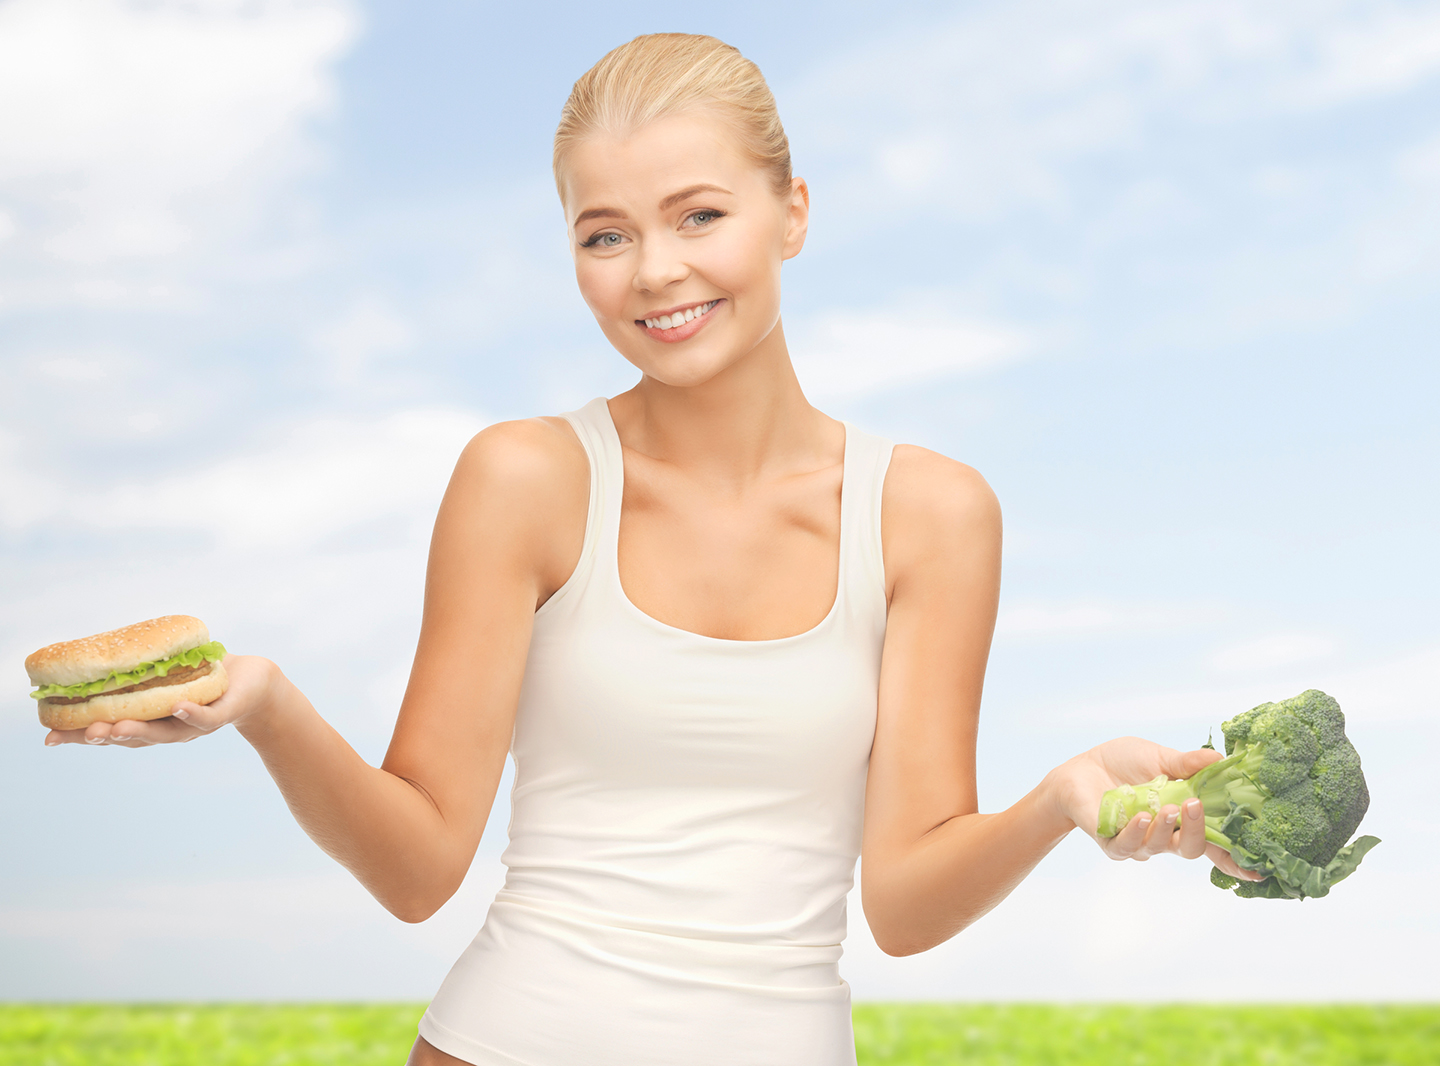 smiling woman with broccoli and hamburger